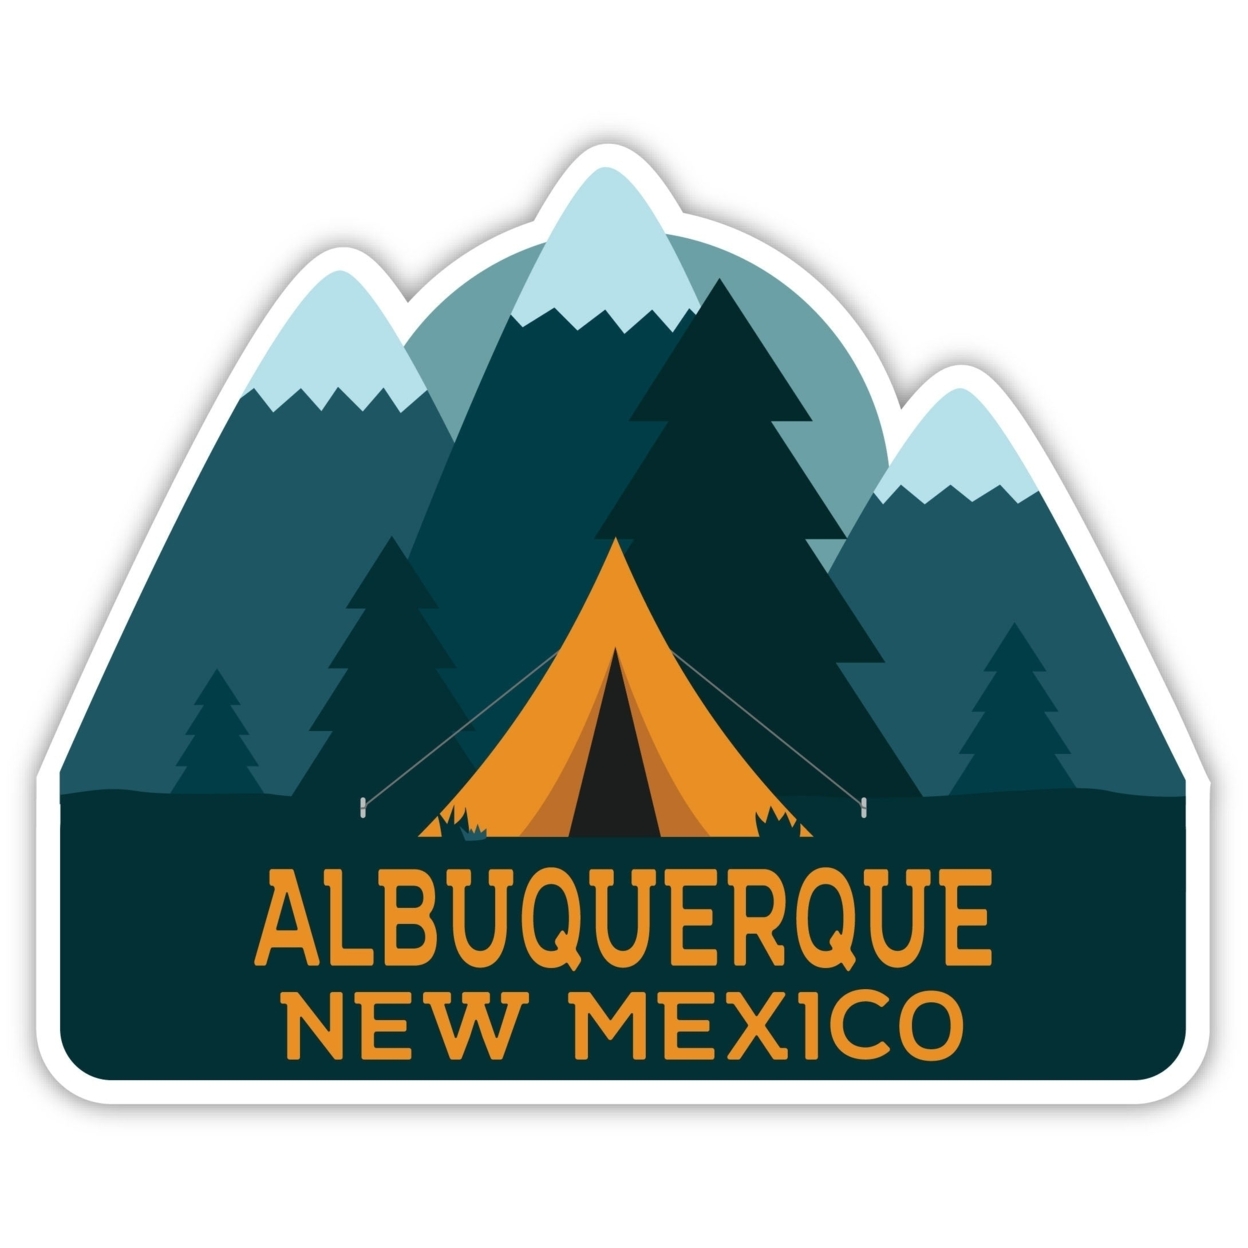 Albuquerque New Mexico Souvenir Decorative Stickers (Choose Theme And Size) - 4-Pack, 10-Inch, Tent